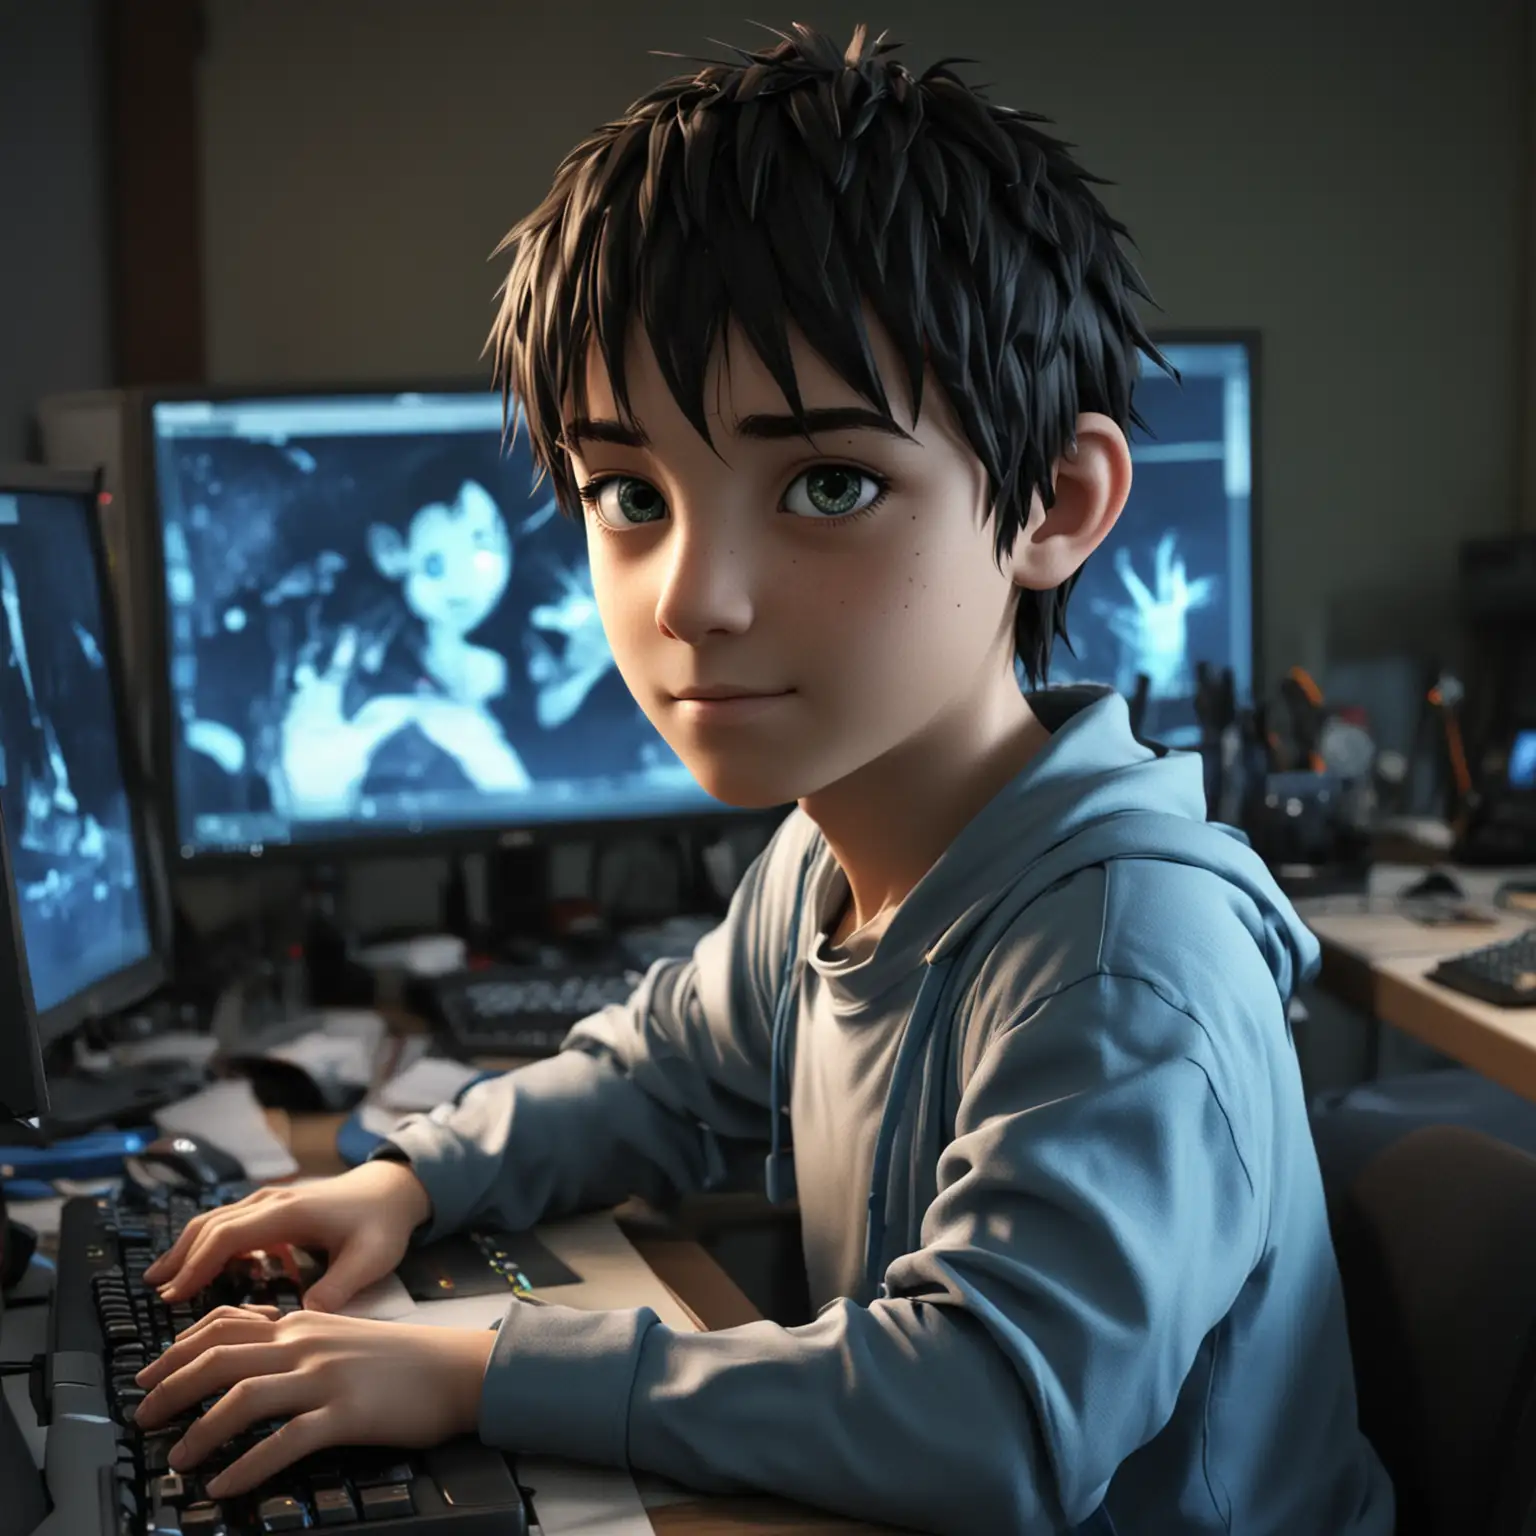 Anime-Boy-Working-on-Computer-Digital-Avatar-3D-Art